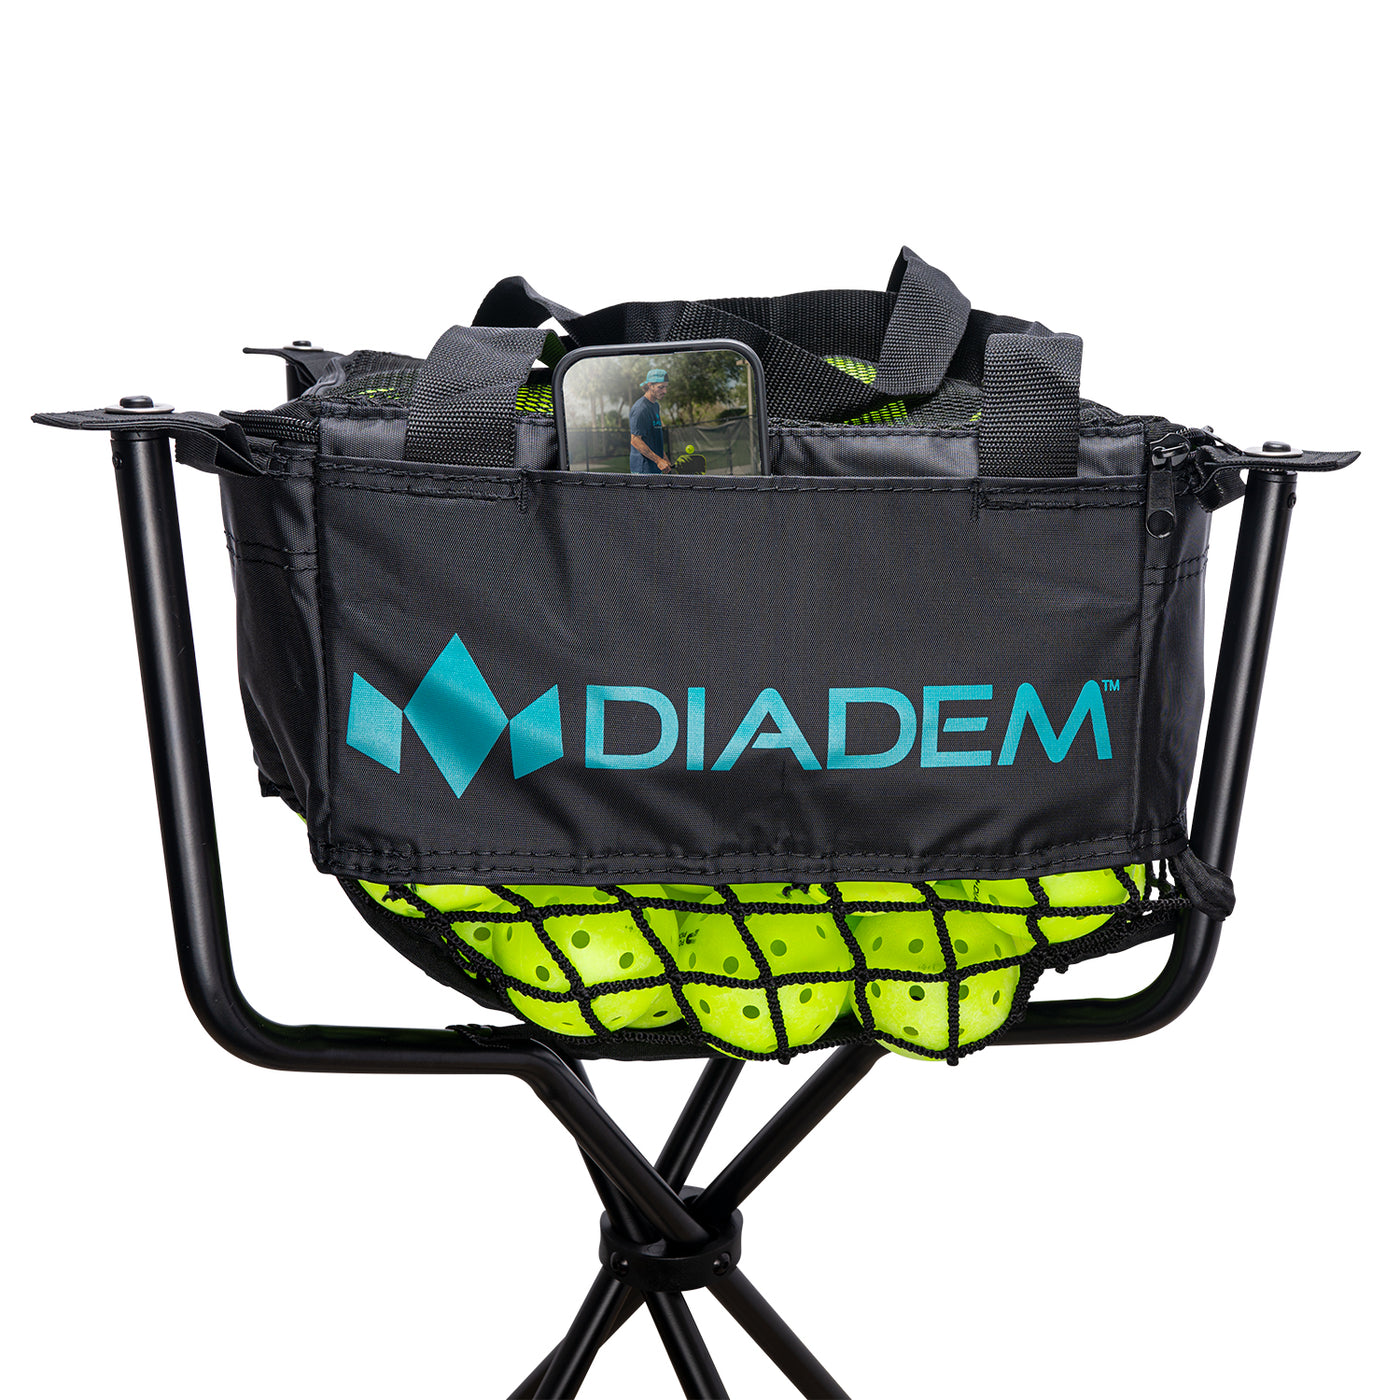 Diadem Sports Ball Cart Accessories, Ball Bag